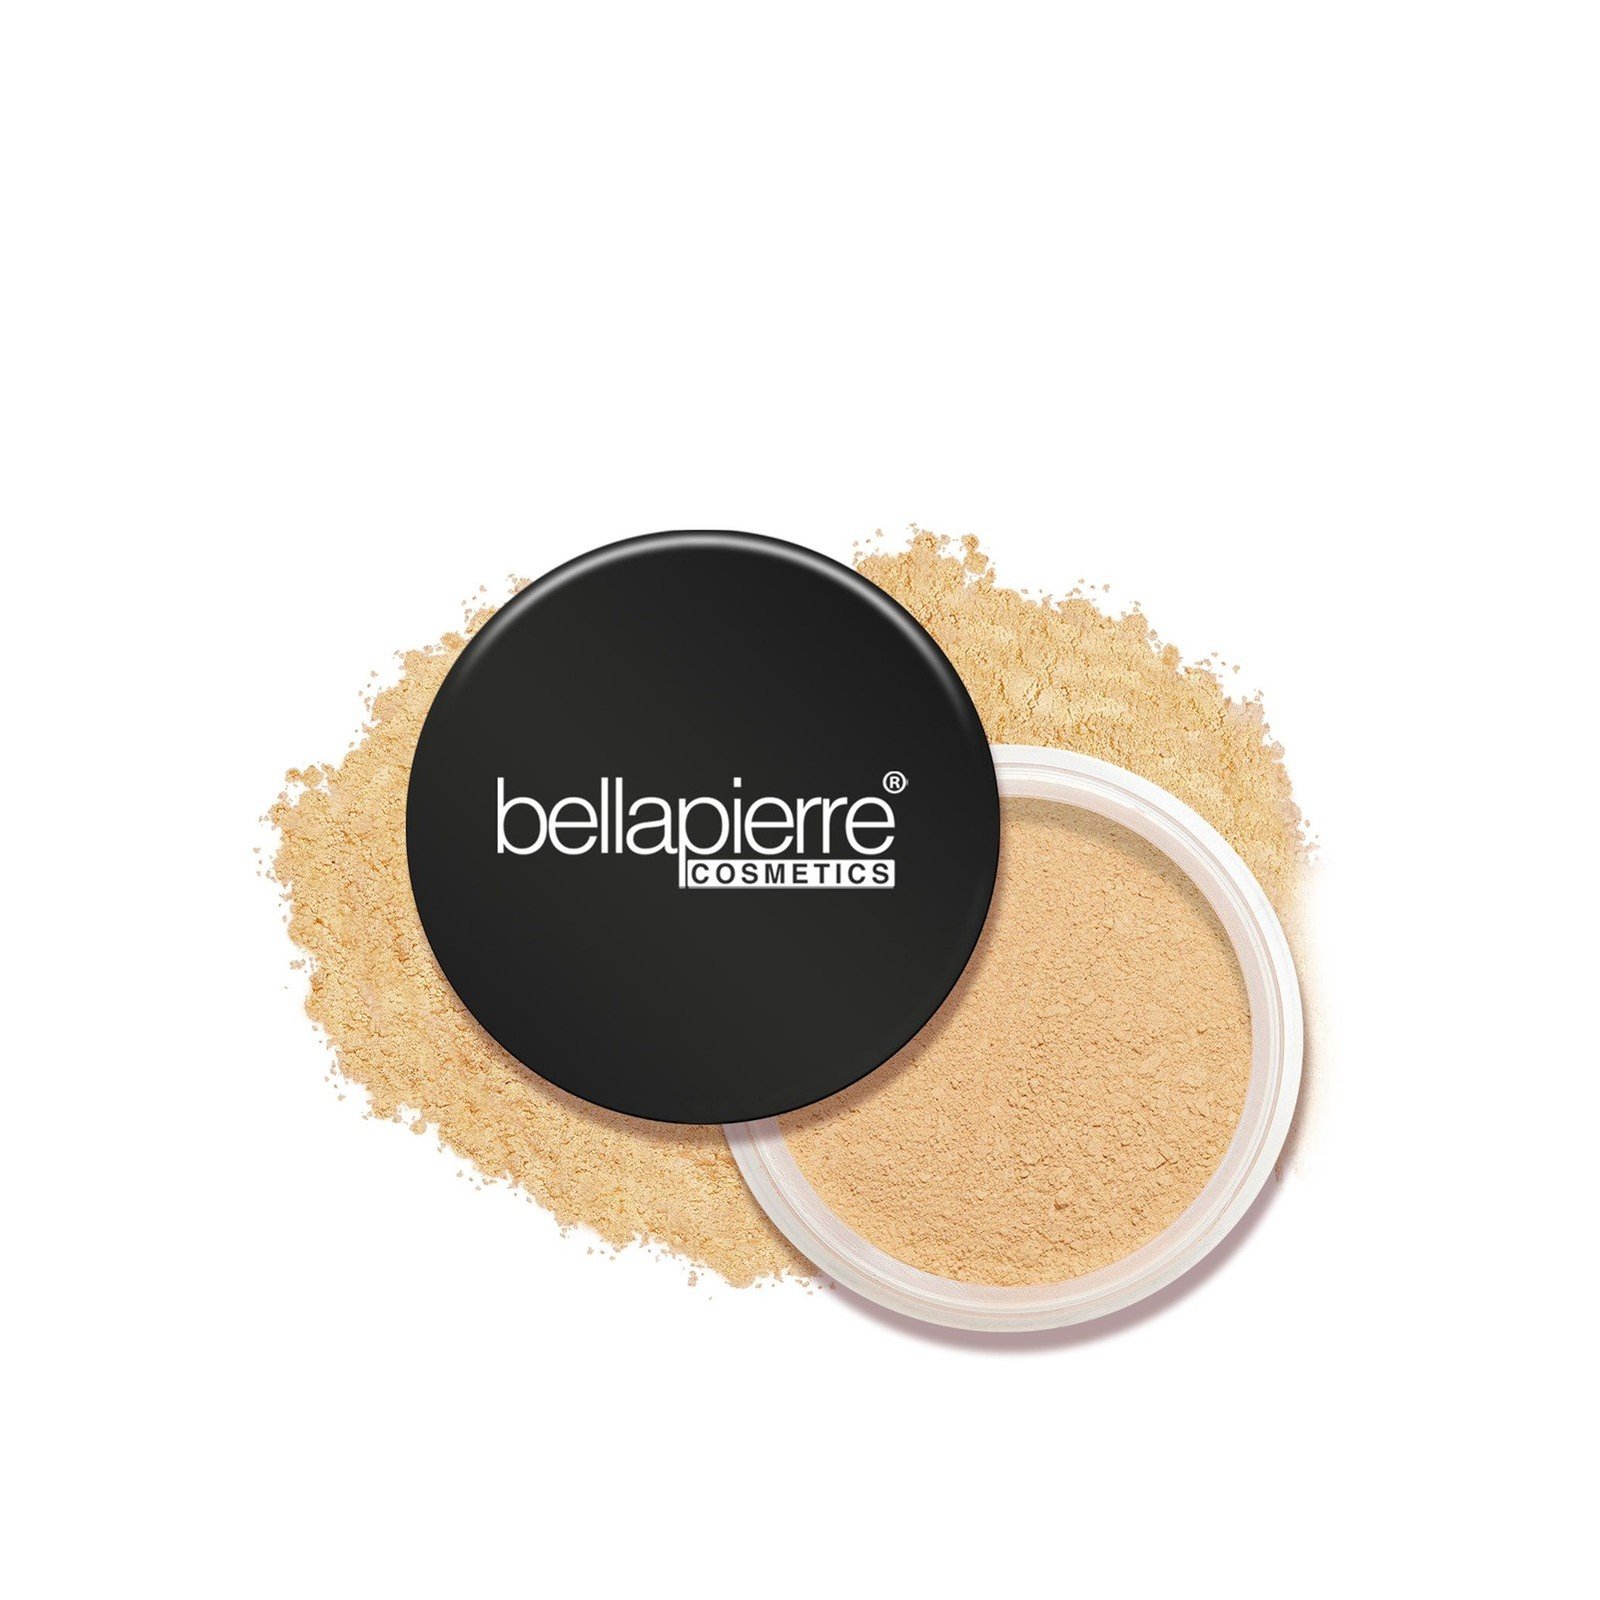 Bellapierre Cosmetics Mineral Foundation SPF15 Nutmeg 9g (0.32oz)